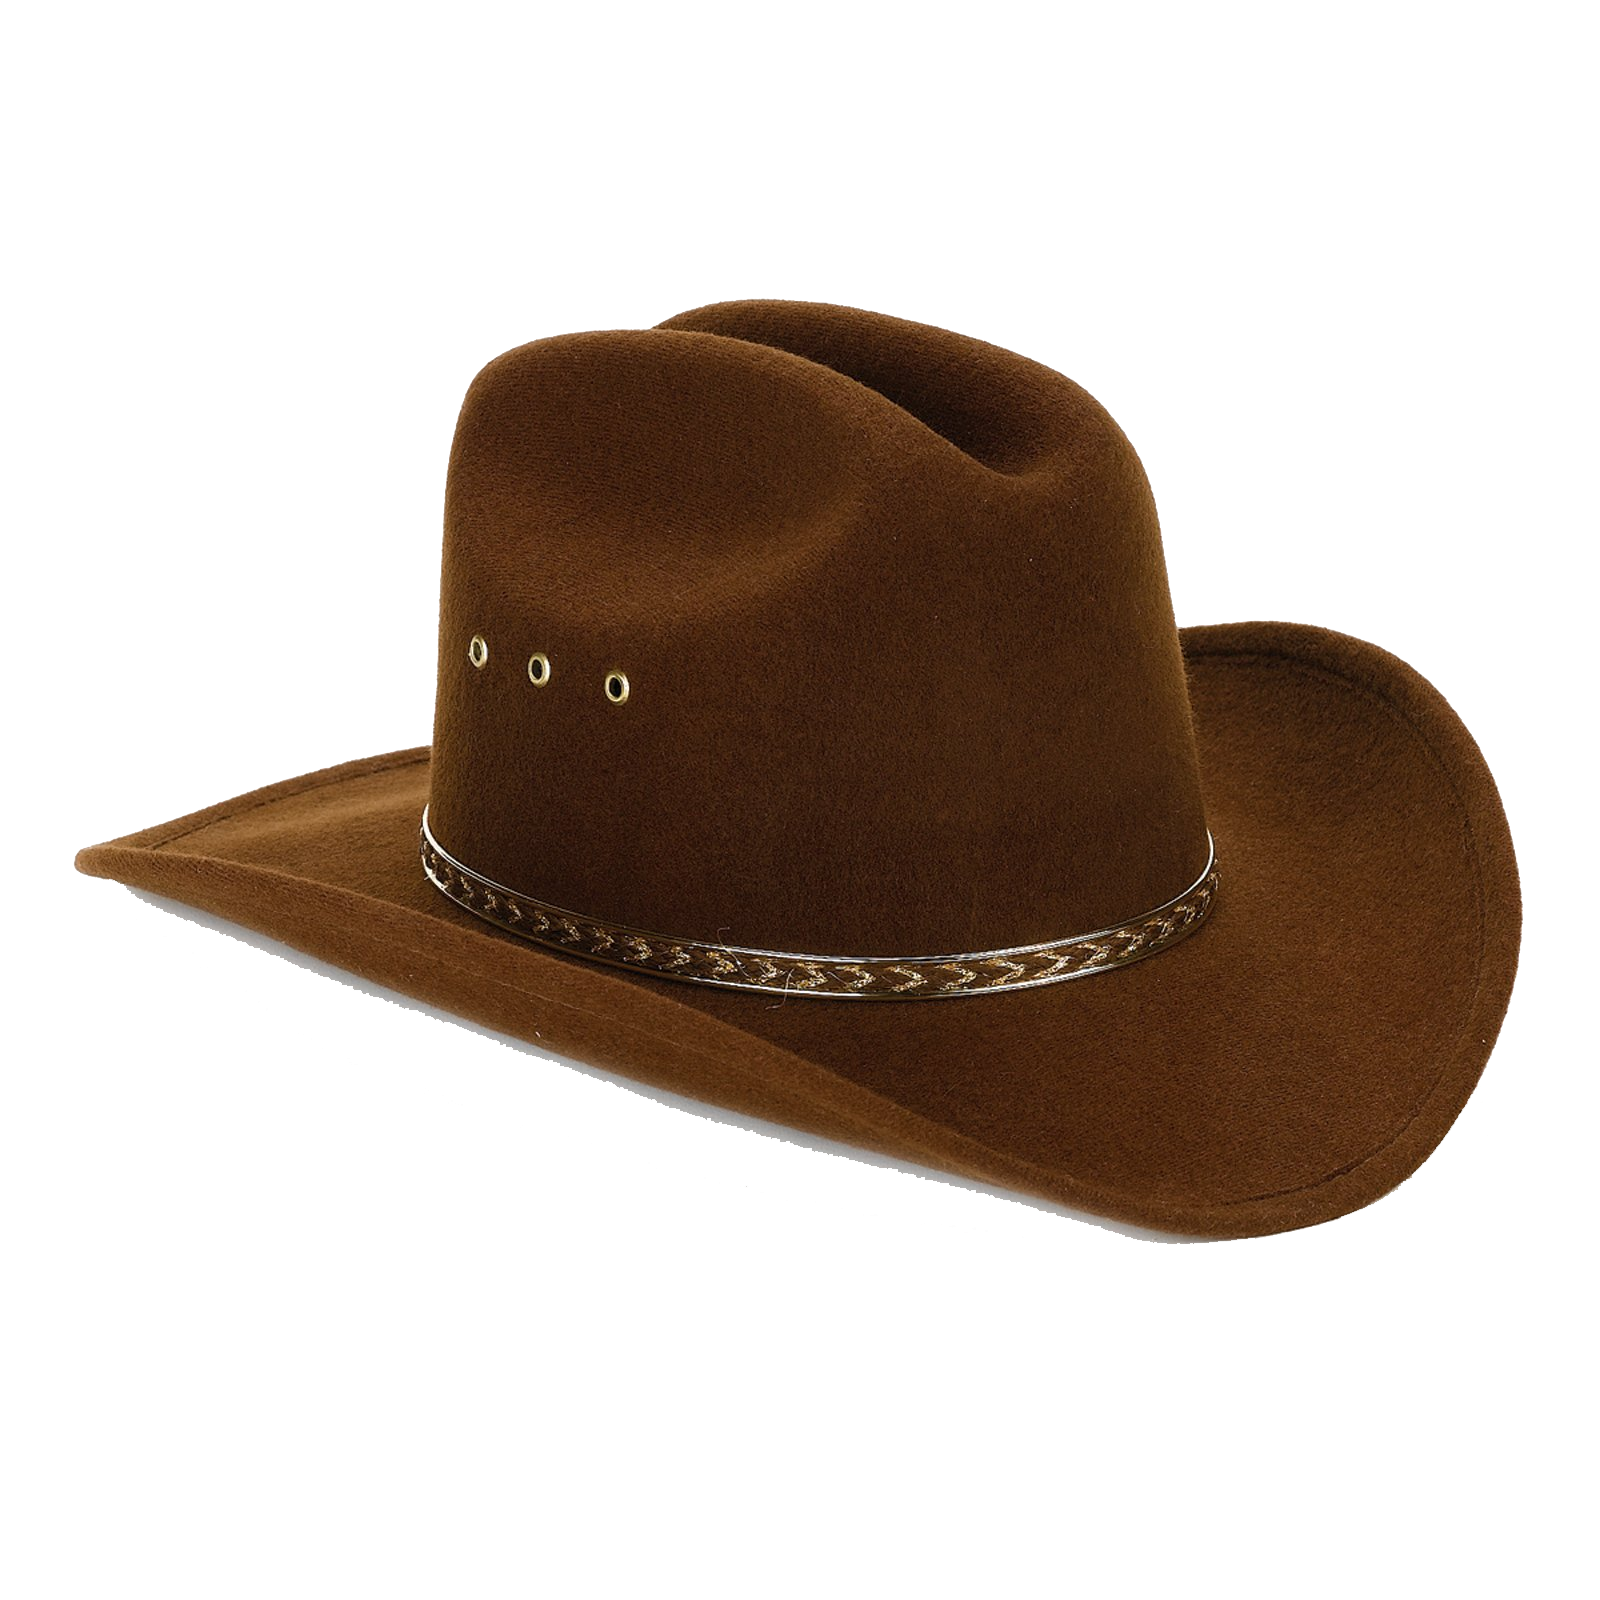 cowboy-hat-flint-lockwood-png-download-391-800-free-transparent